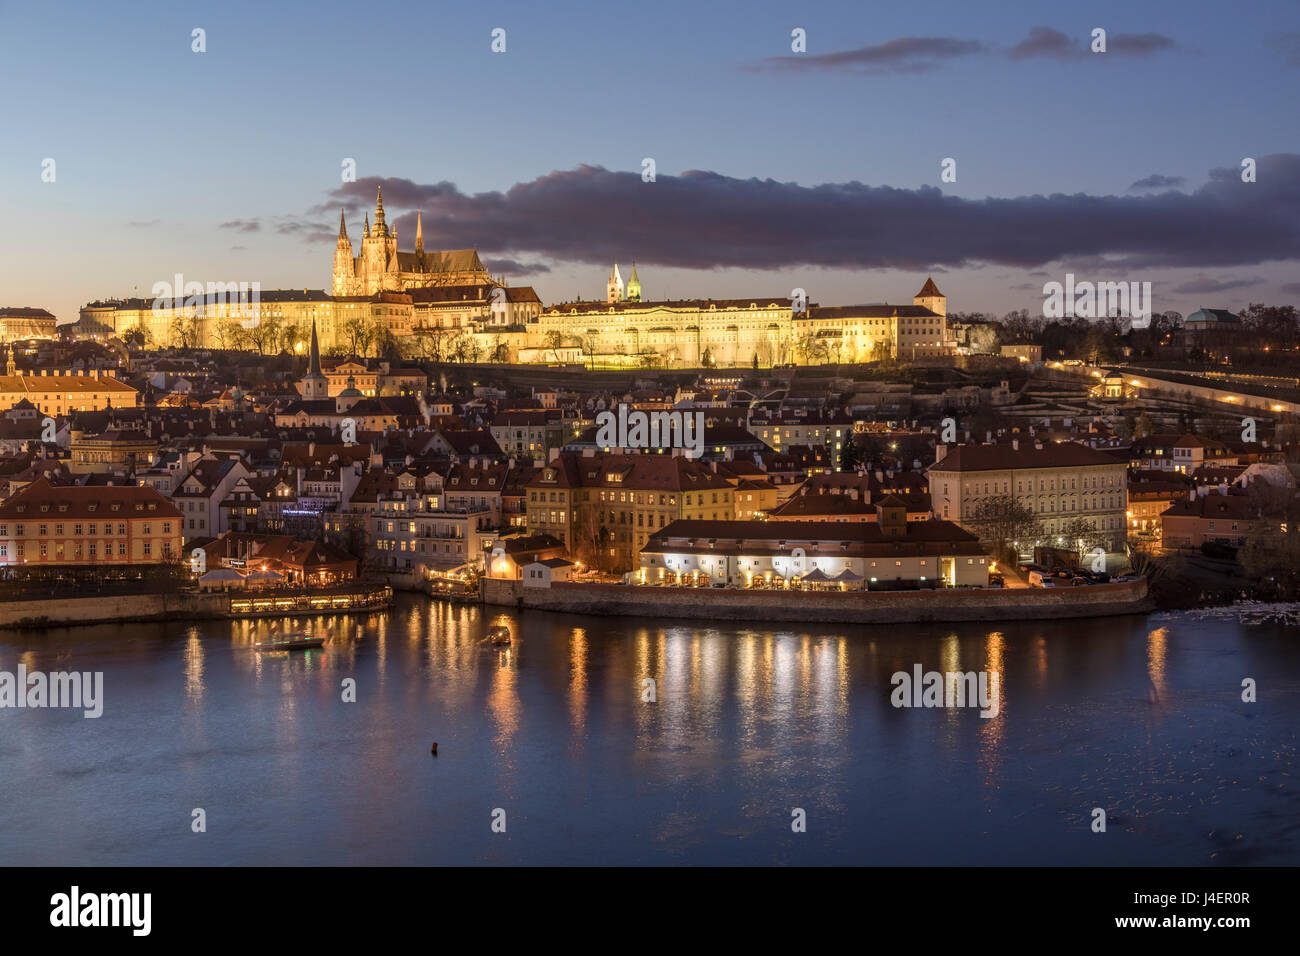 View of the Vltava River framed by historical buildings at dusk, Prague, Czech Republic, Europe Stock Photo